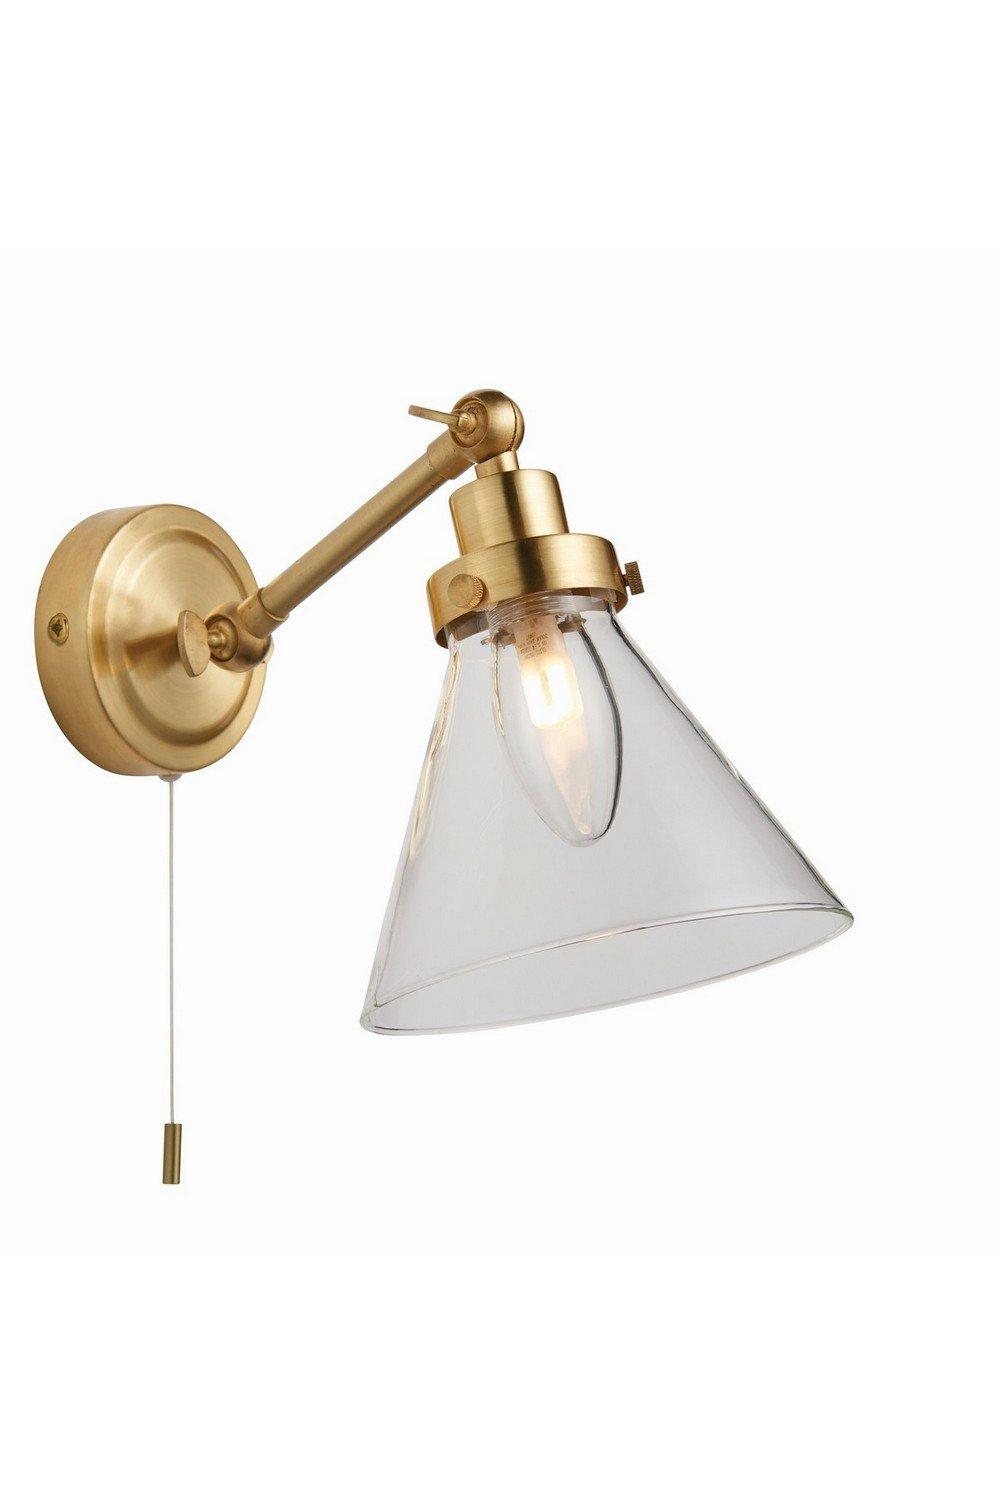 Faraday Bathroom Adjustable Dome Wall Light with Pull Cord Satin Brass Glass Shade